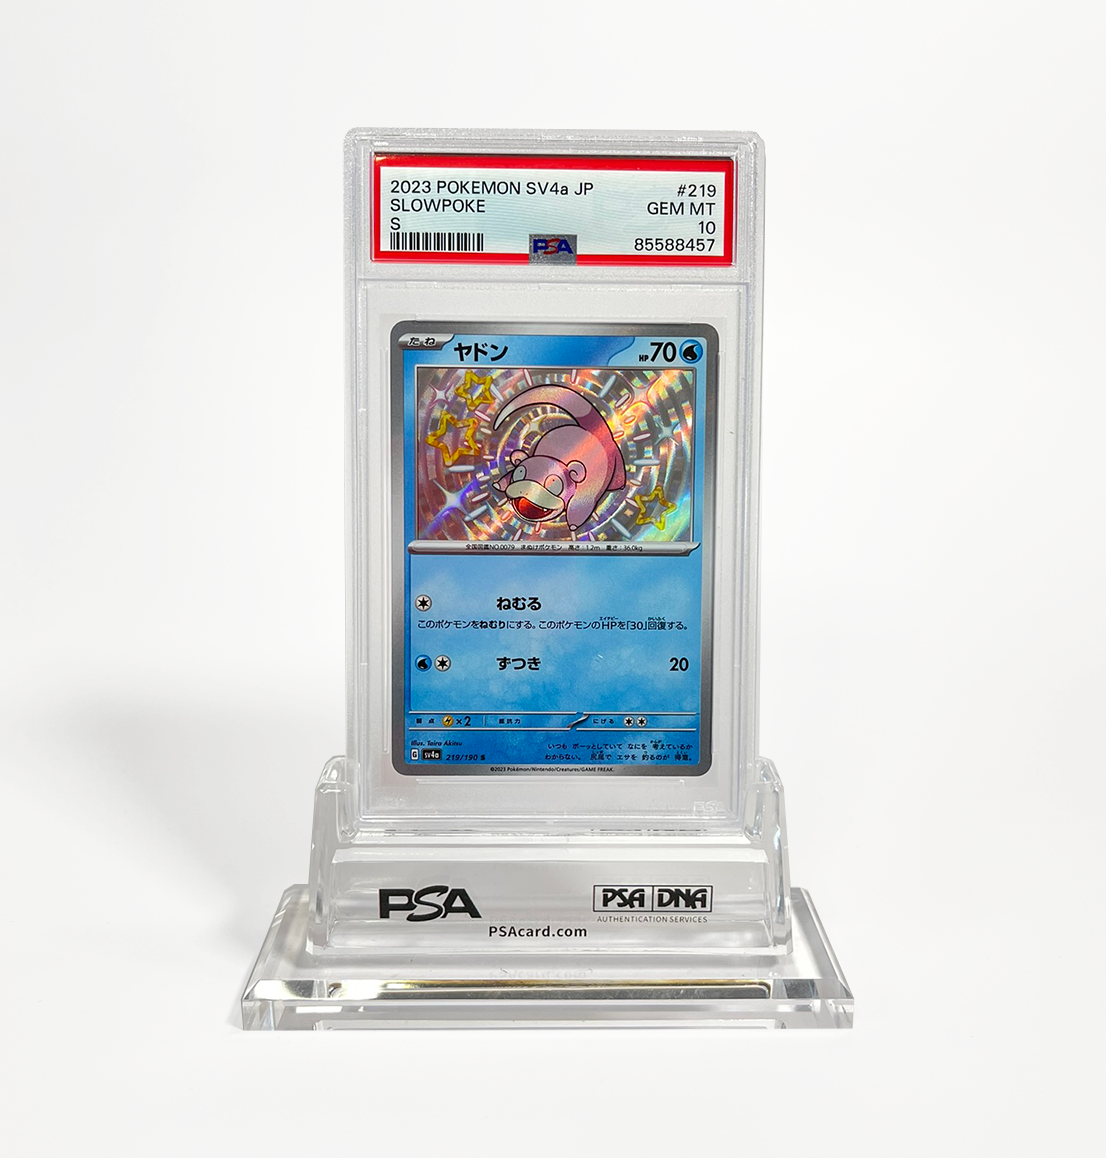 PSA 10 Slowpoke SV4a #219 Shiny Treasure ex Pokemon card